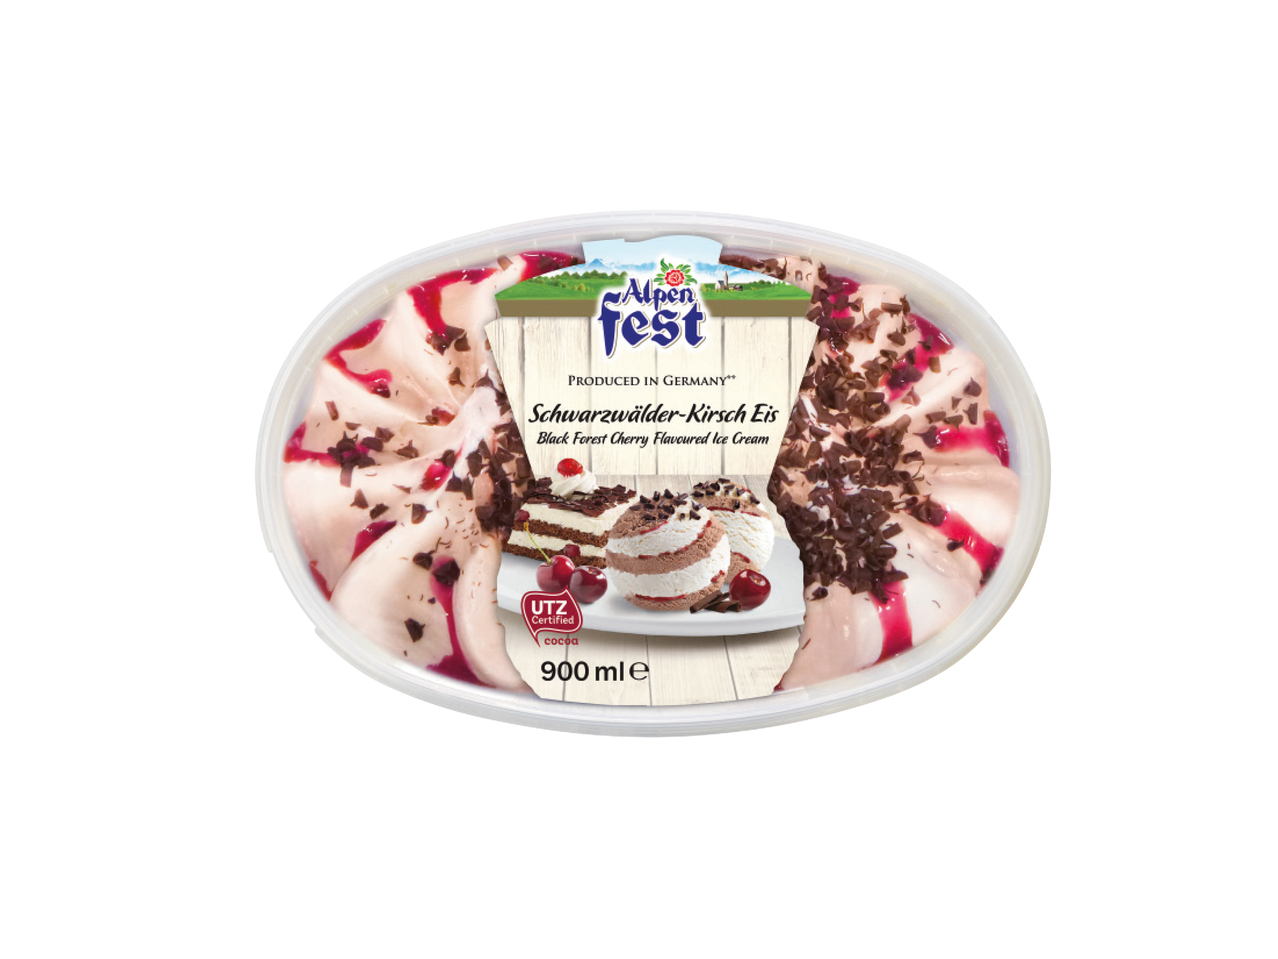 Alpenfest Ice Cream1